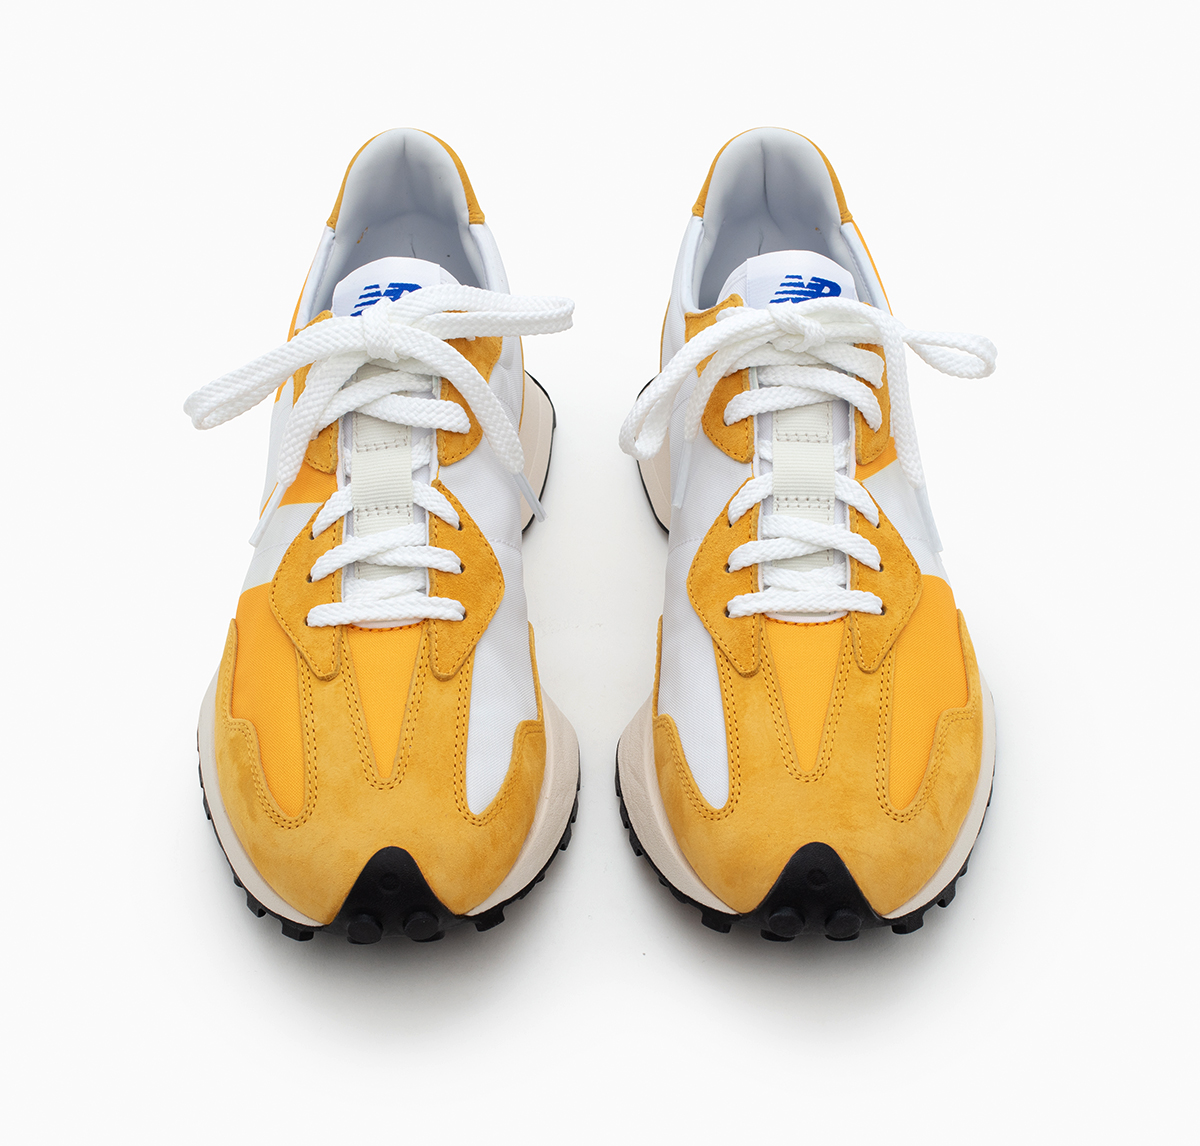 New Balance 327 - Aspen Yellow pair